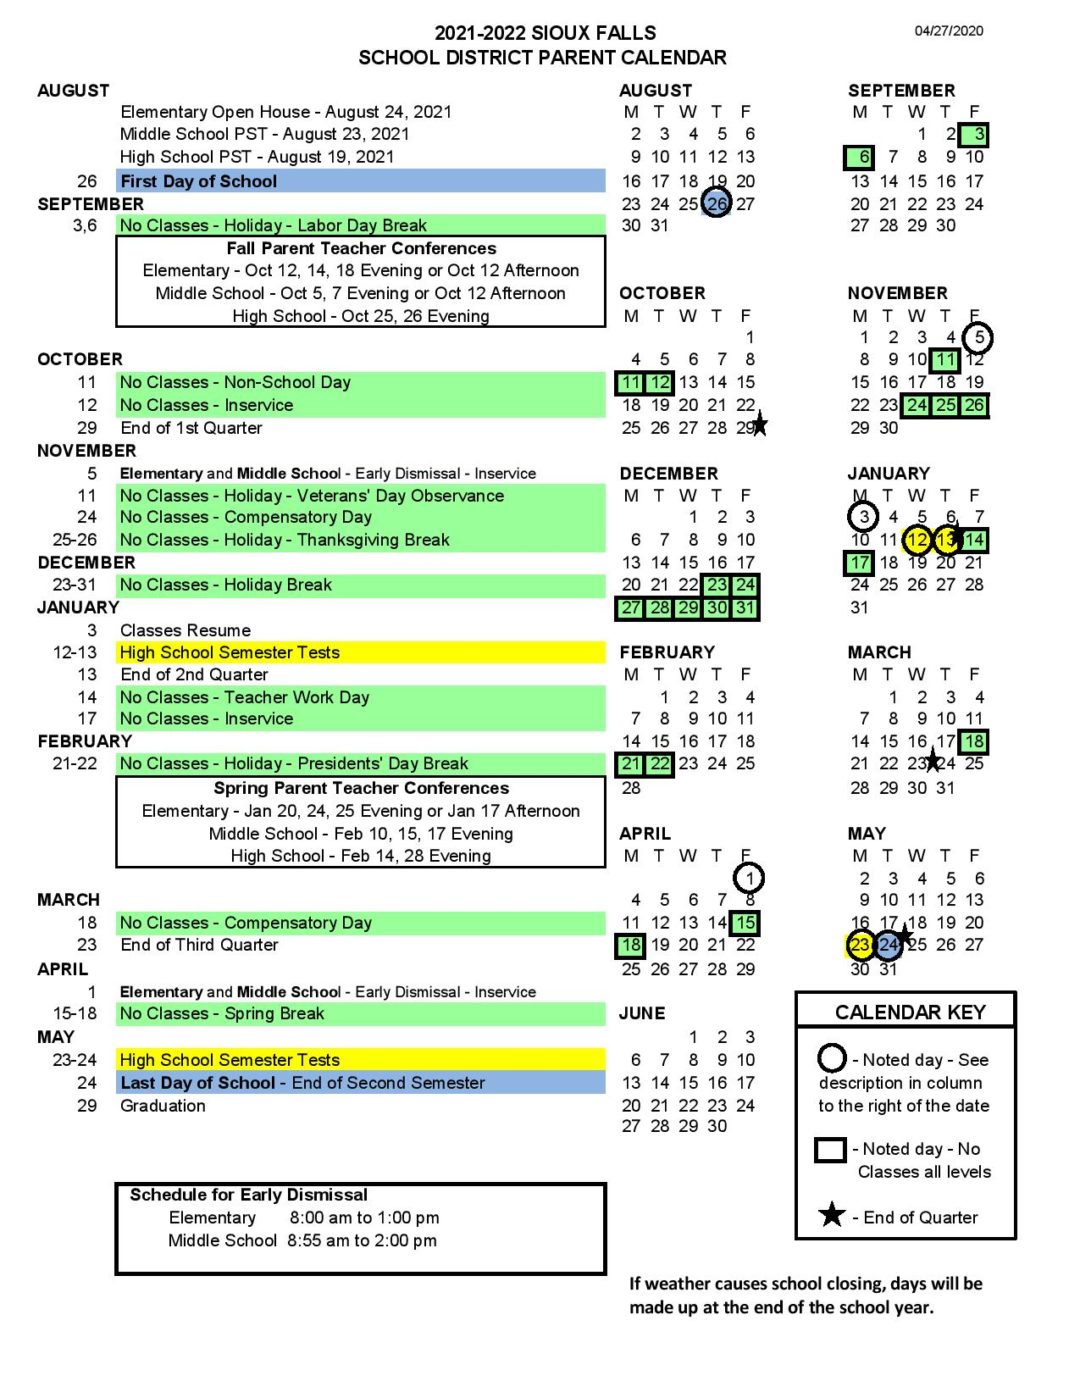 Sioux Falls School District Calendar 2021-2022 - Academic Calendar